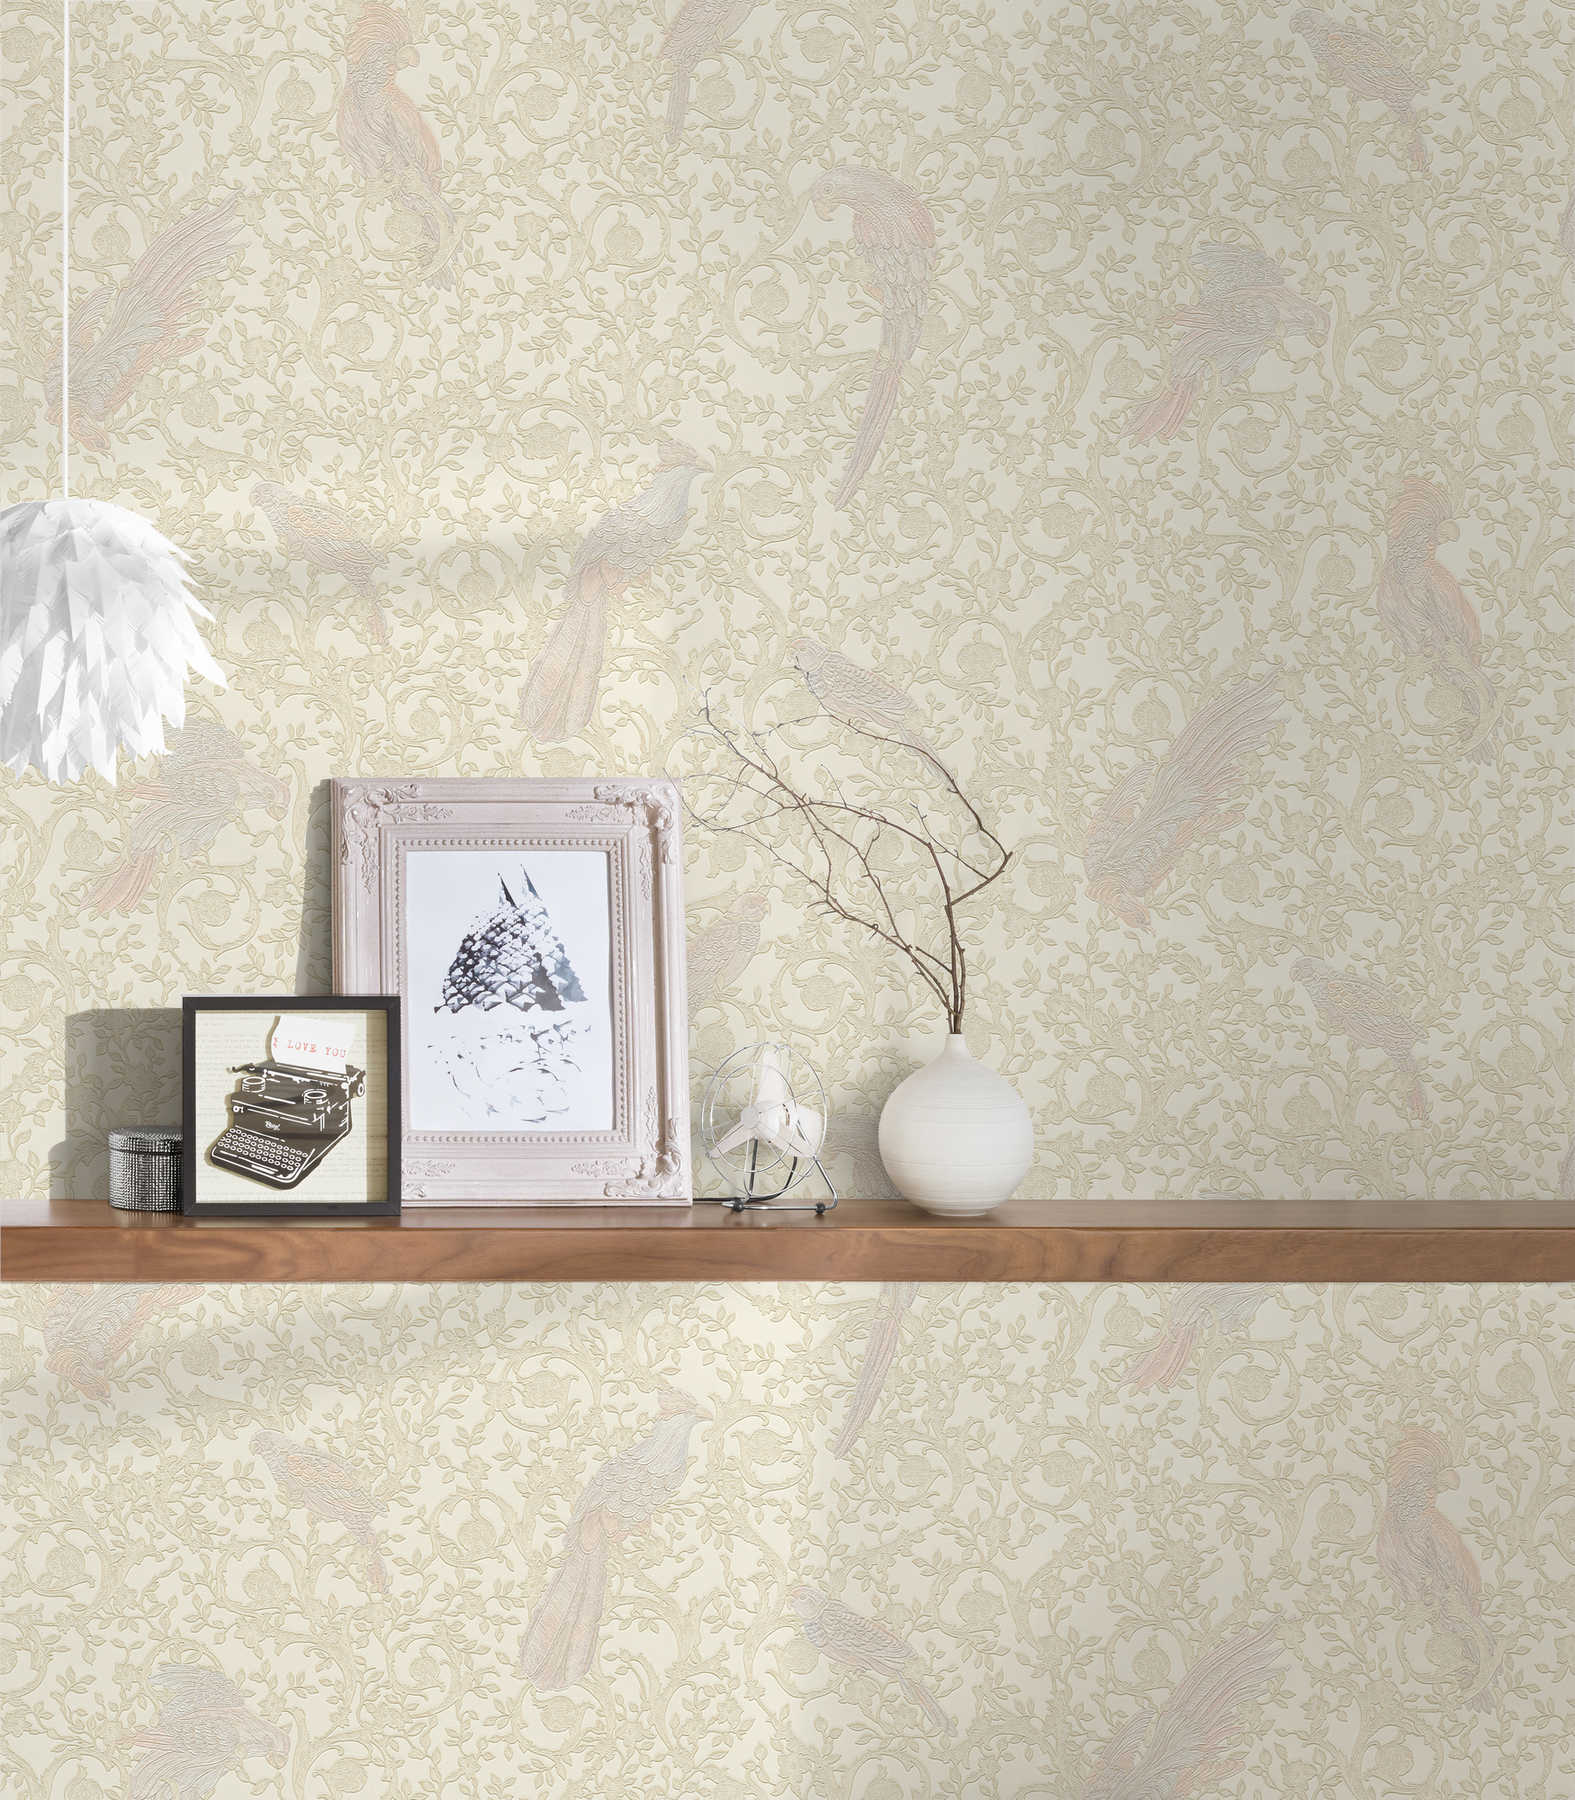             VERSACE Home wallpaper paradise birds & silver accents - silver, beige, cream
        